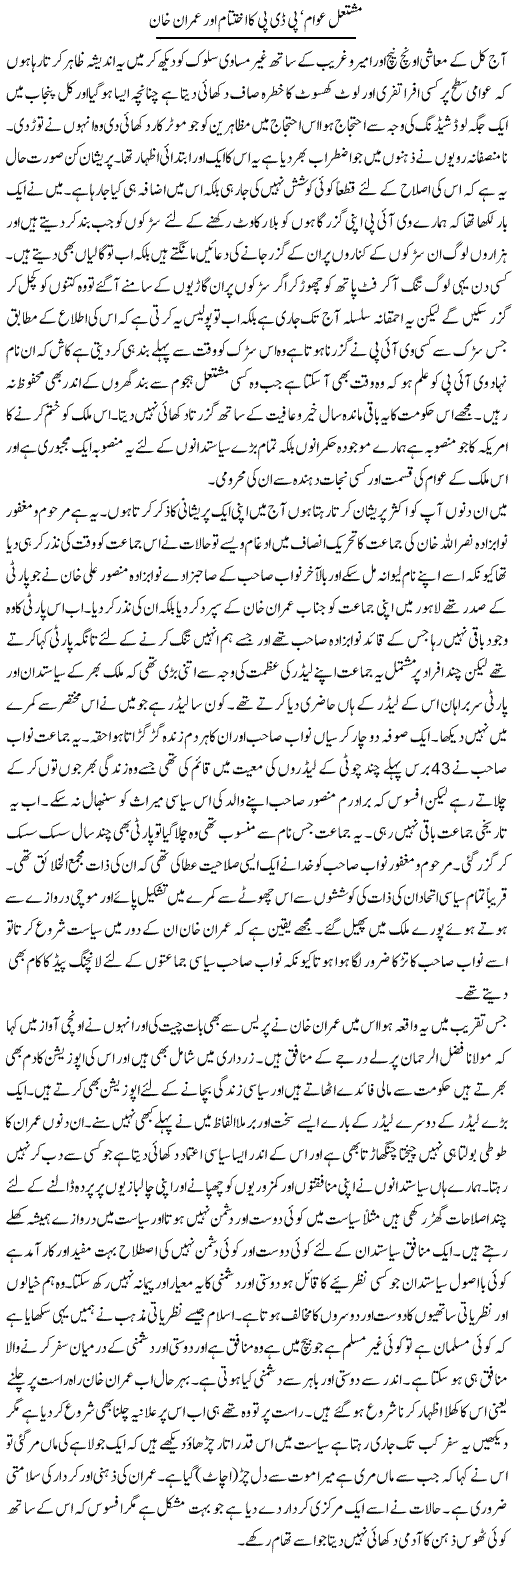 Public and Imran Express Column Abdul Qadir 23 March 2012